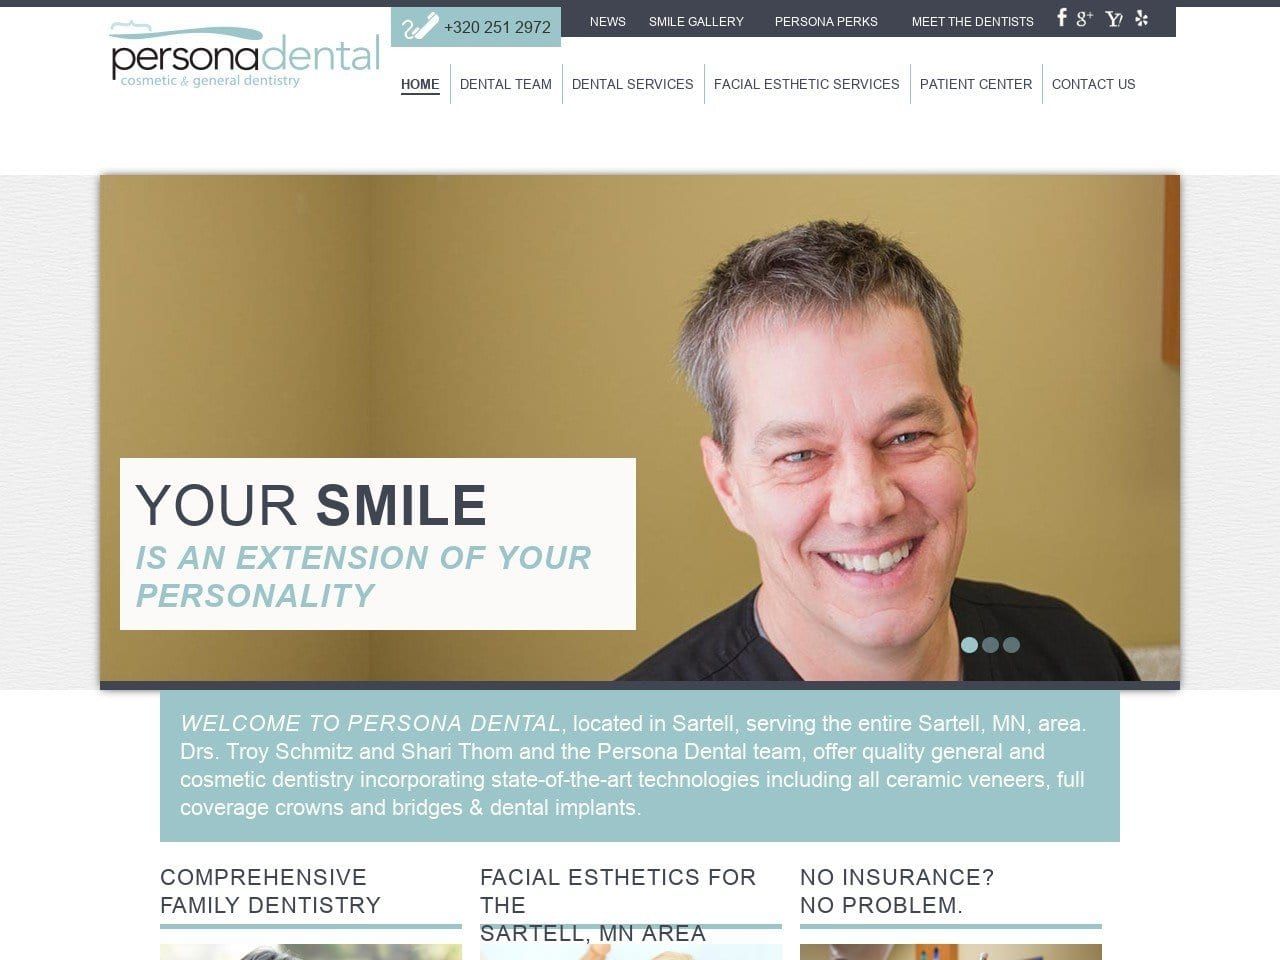 Persona Dental Cosmetic & General Dentistry Website Screenshot from personadental.com